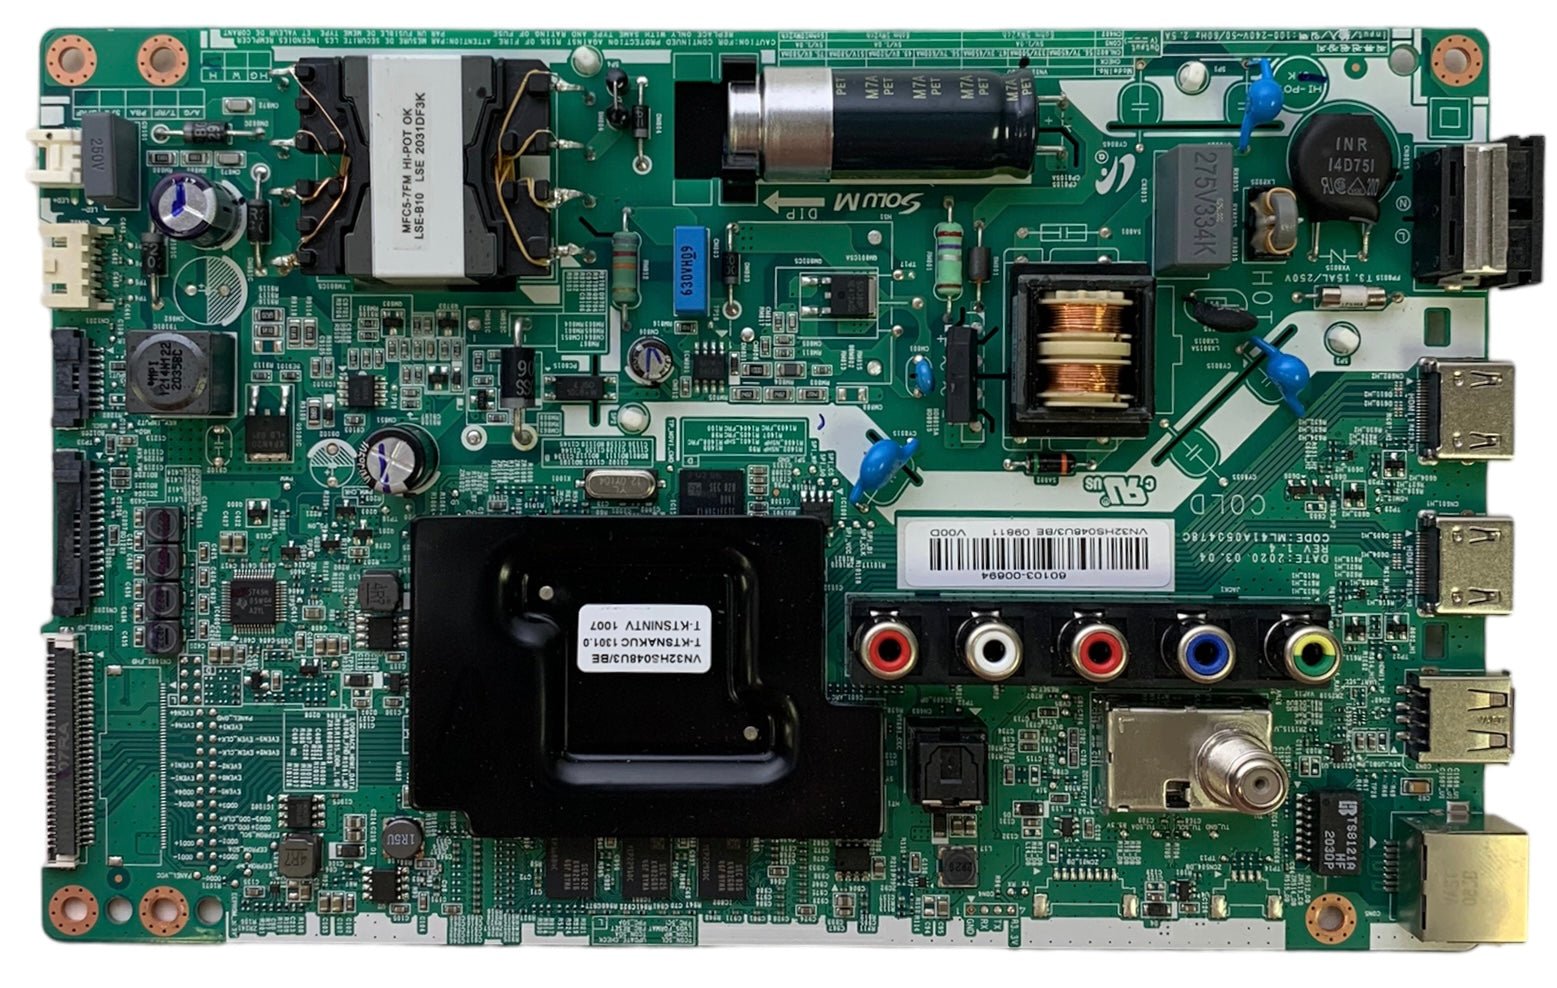 Samsung BN81-20115A Main Board/Power Supply for UN32M4500BFXZA (Version BG08)